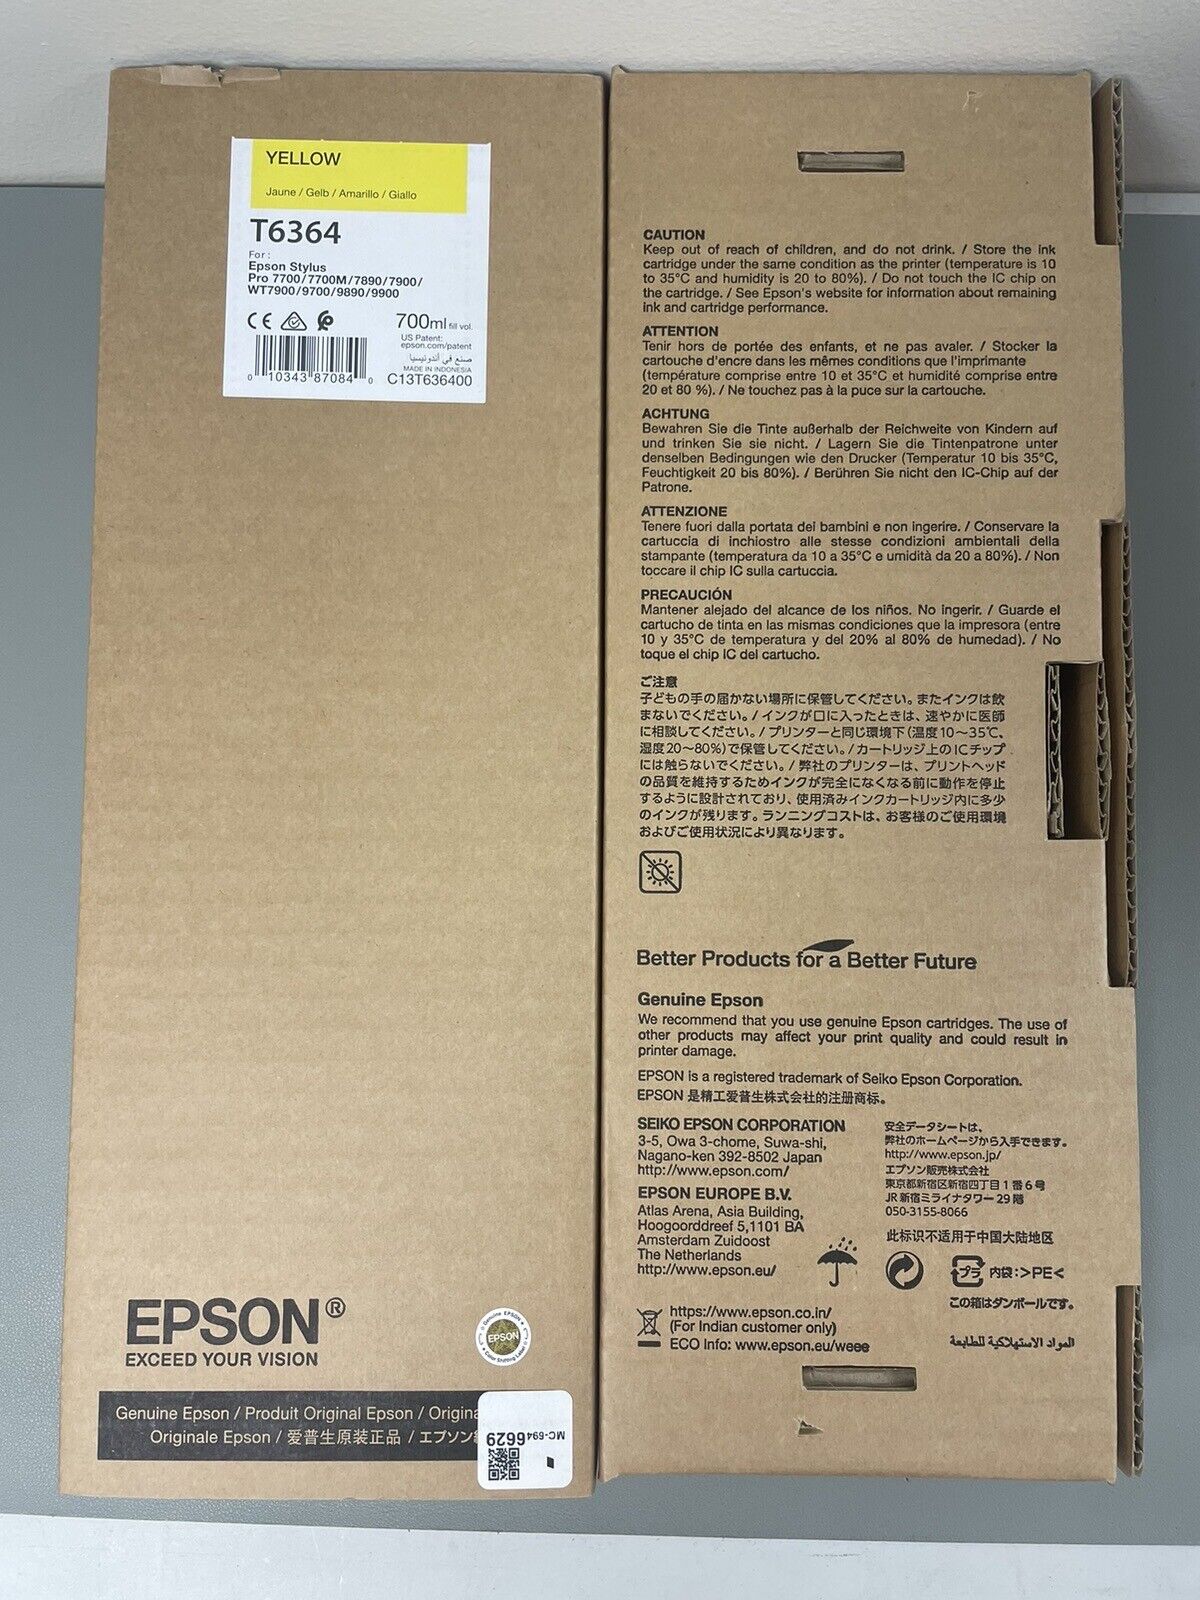 Two Genuine Epson T6364 Yellow Ink Tank Bag 700ml Stylus Pro 7890  EXP 12/22